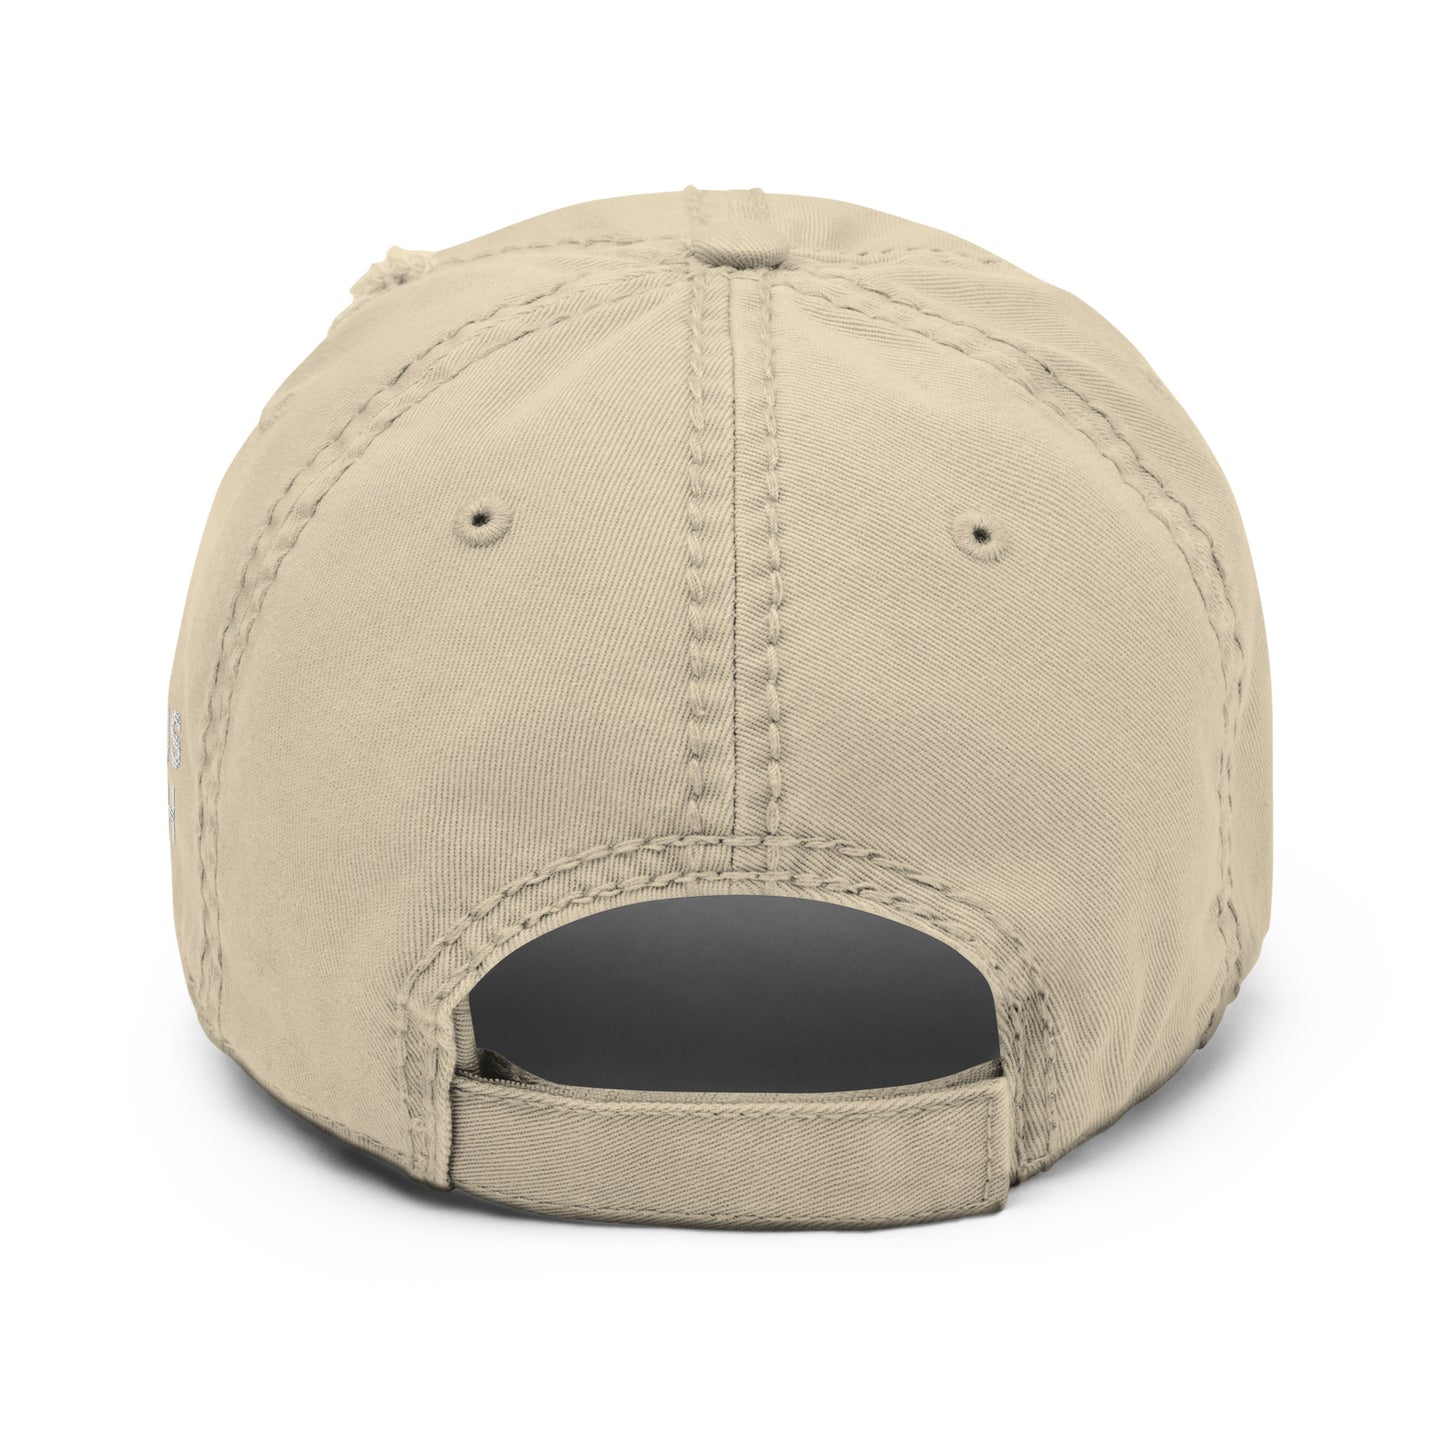 MUSH University - Distressed Dad Hat (White Stitching)